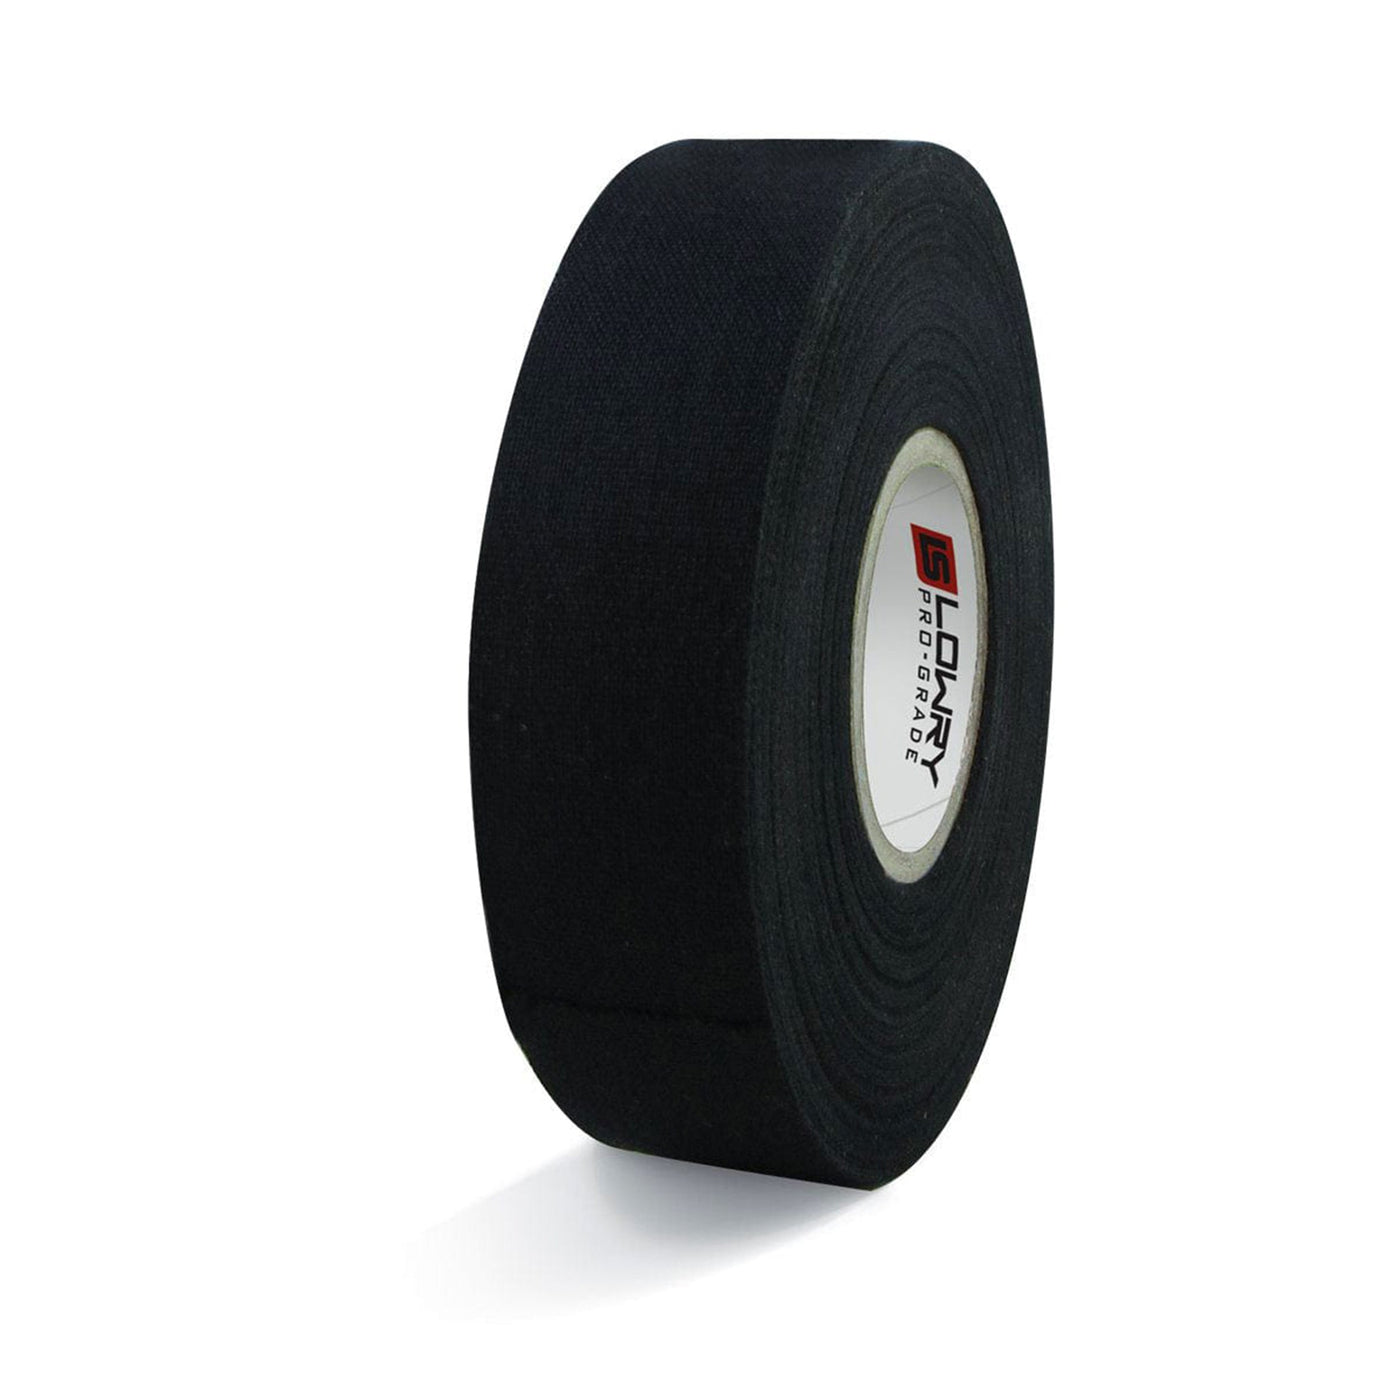 Lowry Sports Pro-Grade Black Hockey Stick Tape - Skinny - The Hockey Shop Source For Sports